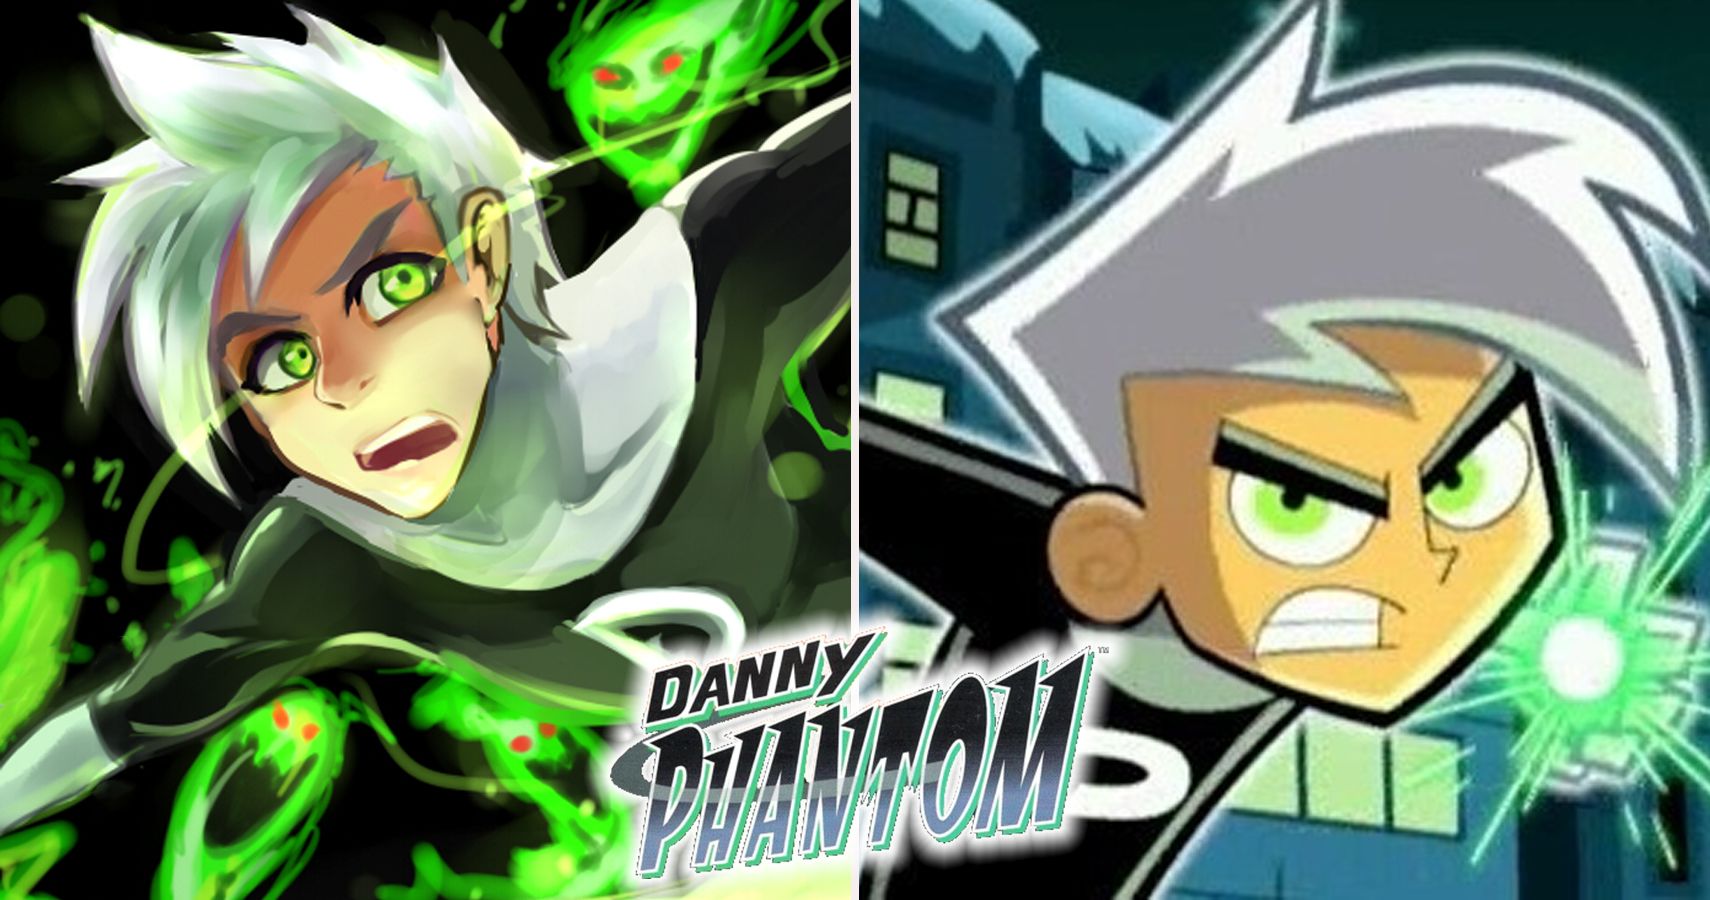 0 Danny Phantom Anime Style 0 by sakura02 on DeviantArt